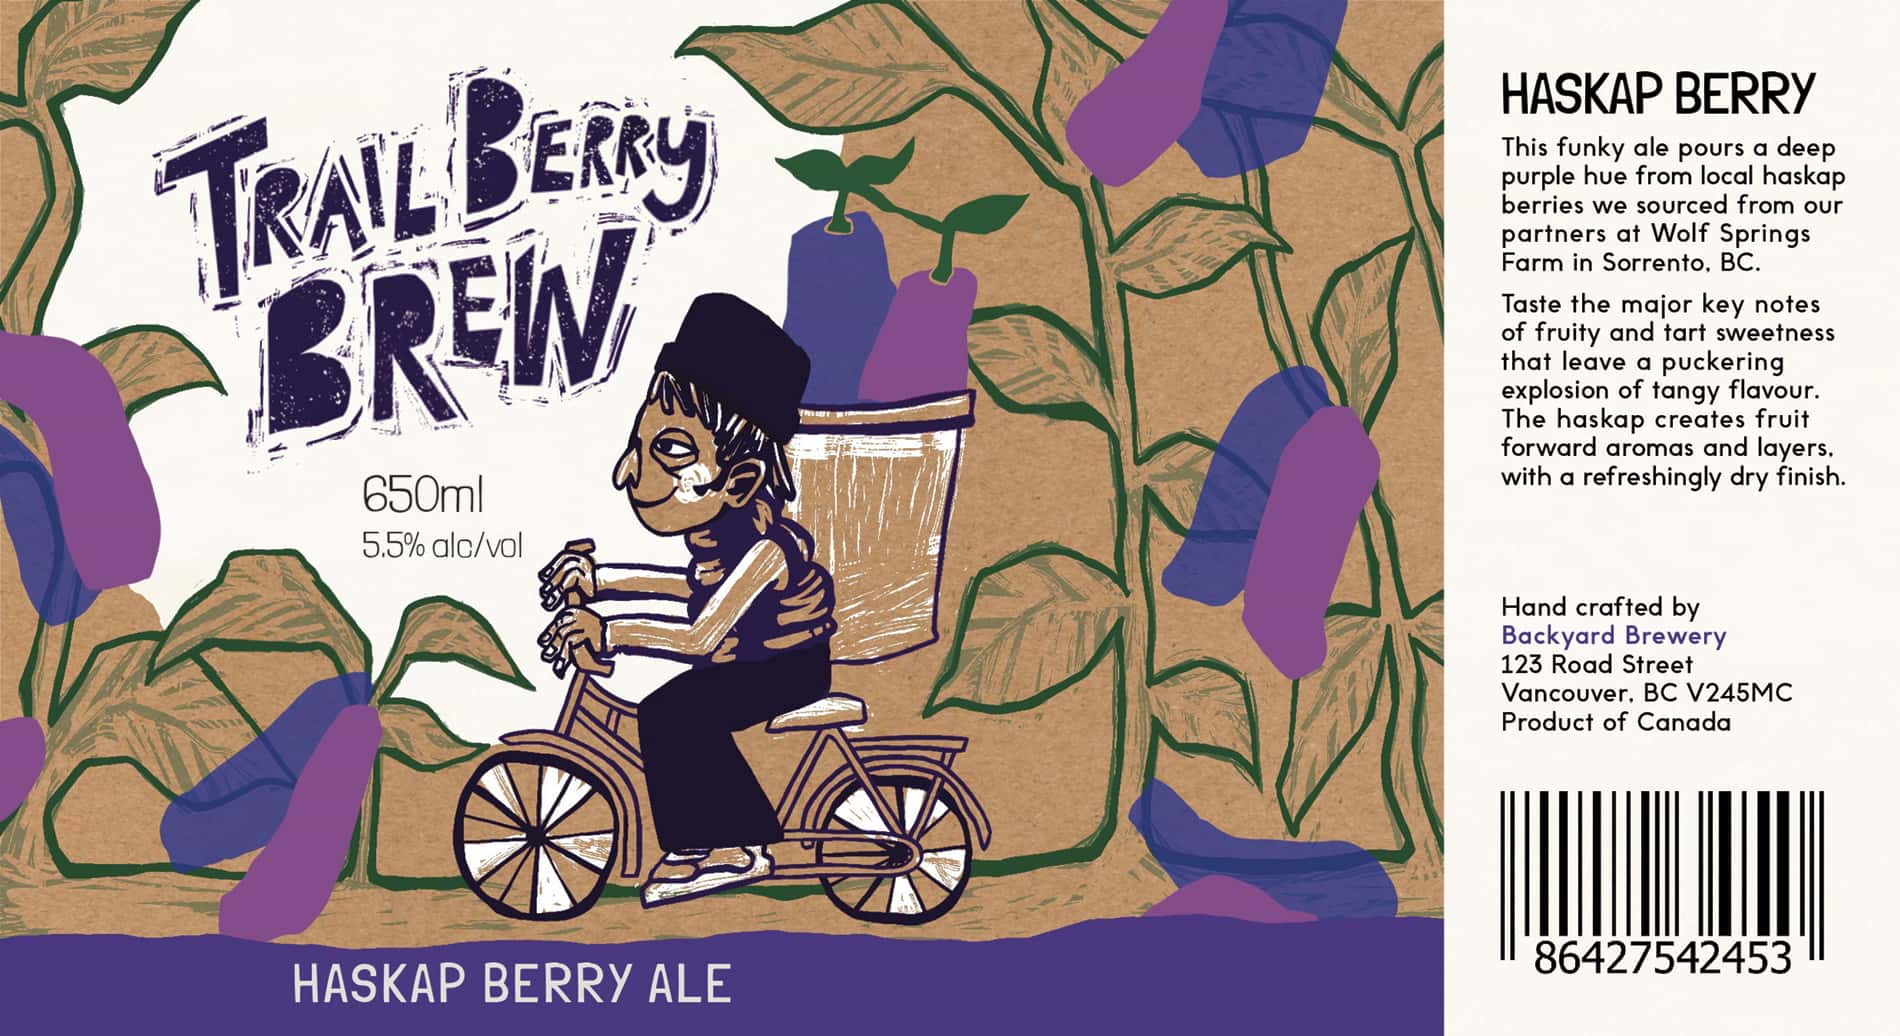 Backyard brewery haskap berry ale label design with an illustration of a little guy biking through a haskap berry bush